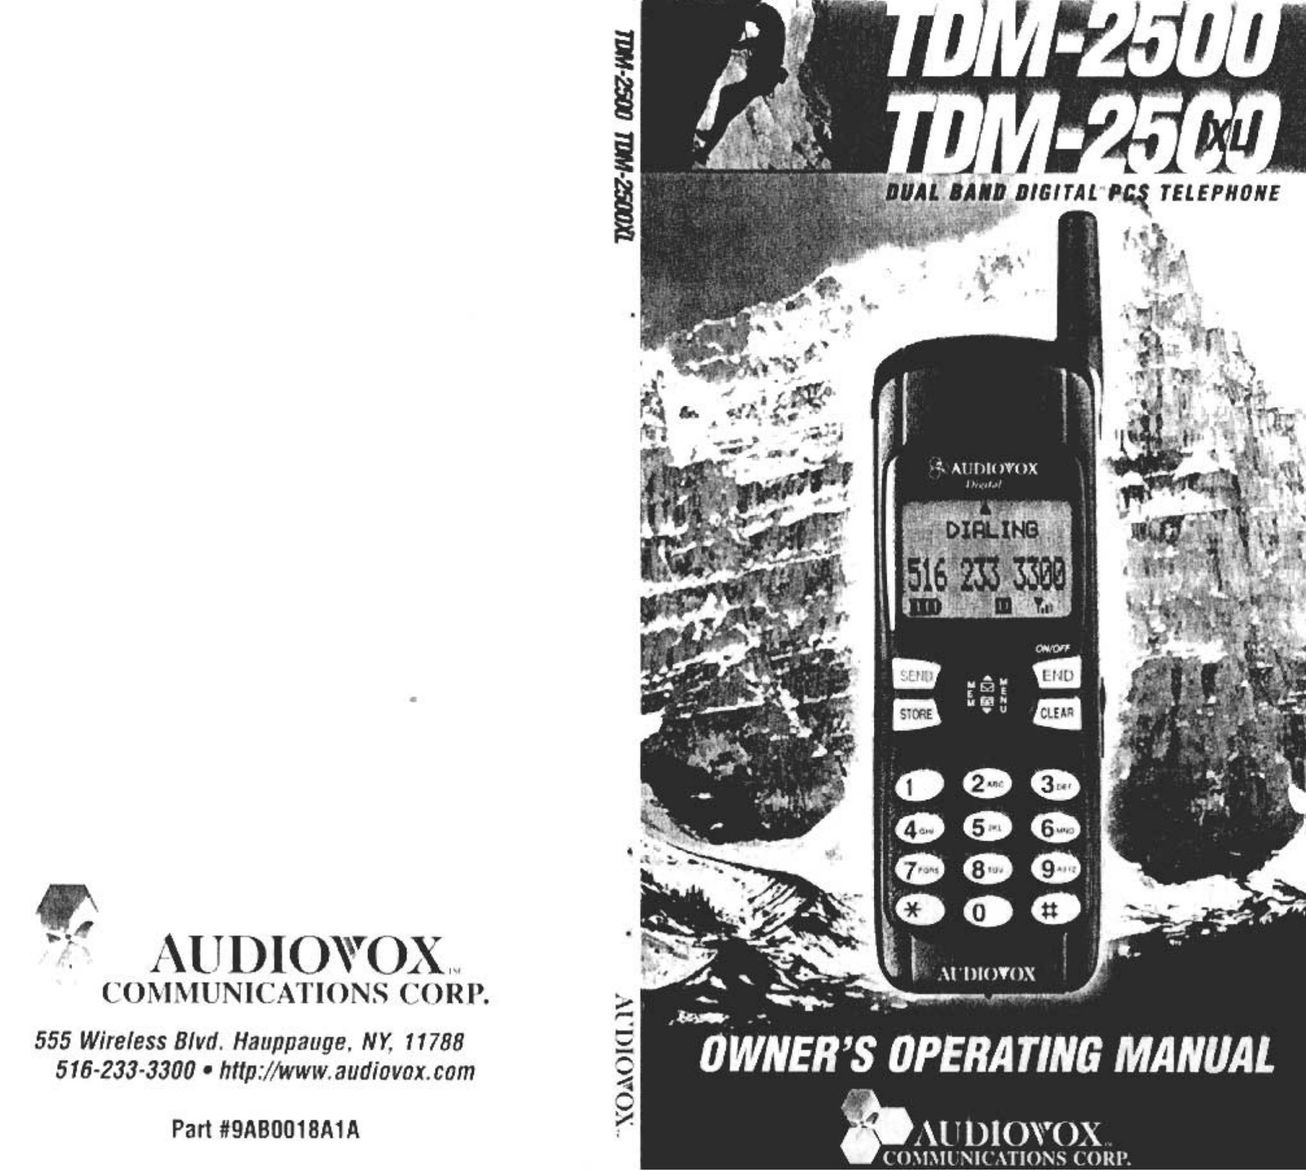 Audiovox TDM-2500 Telephone User Manual